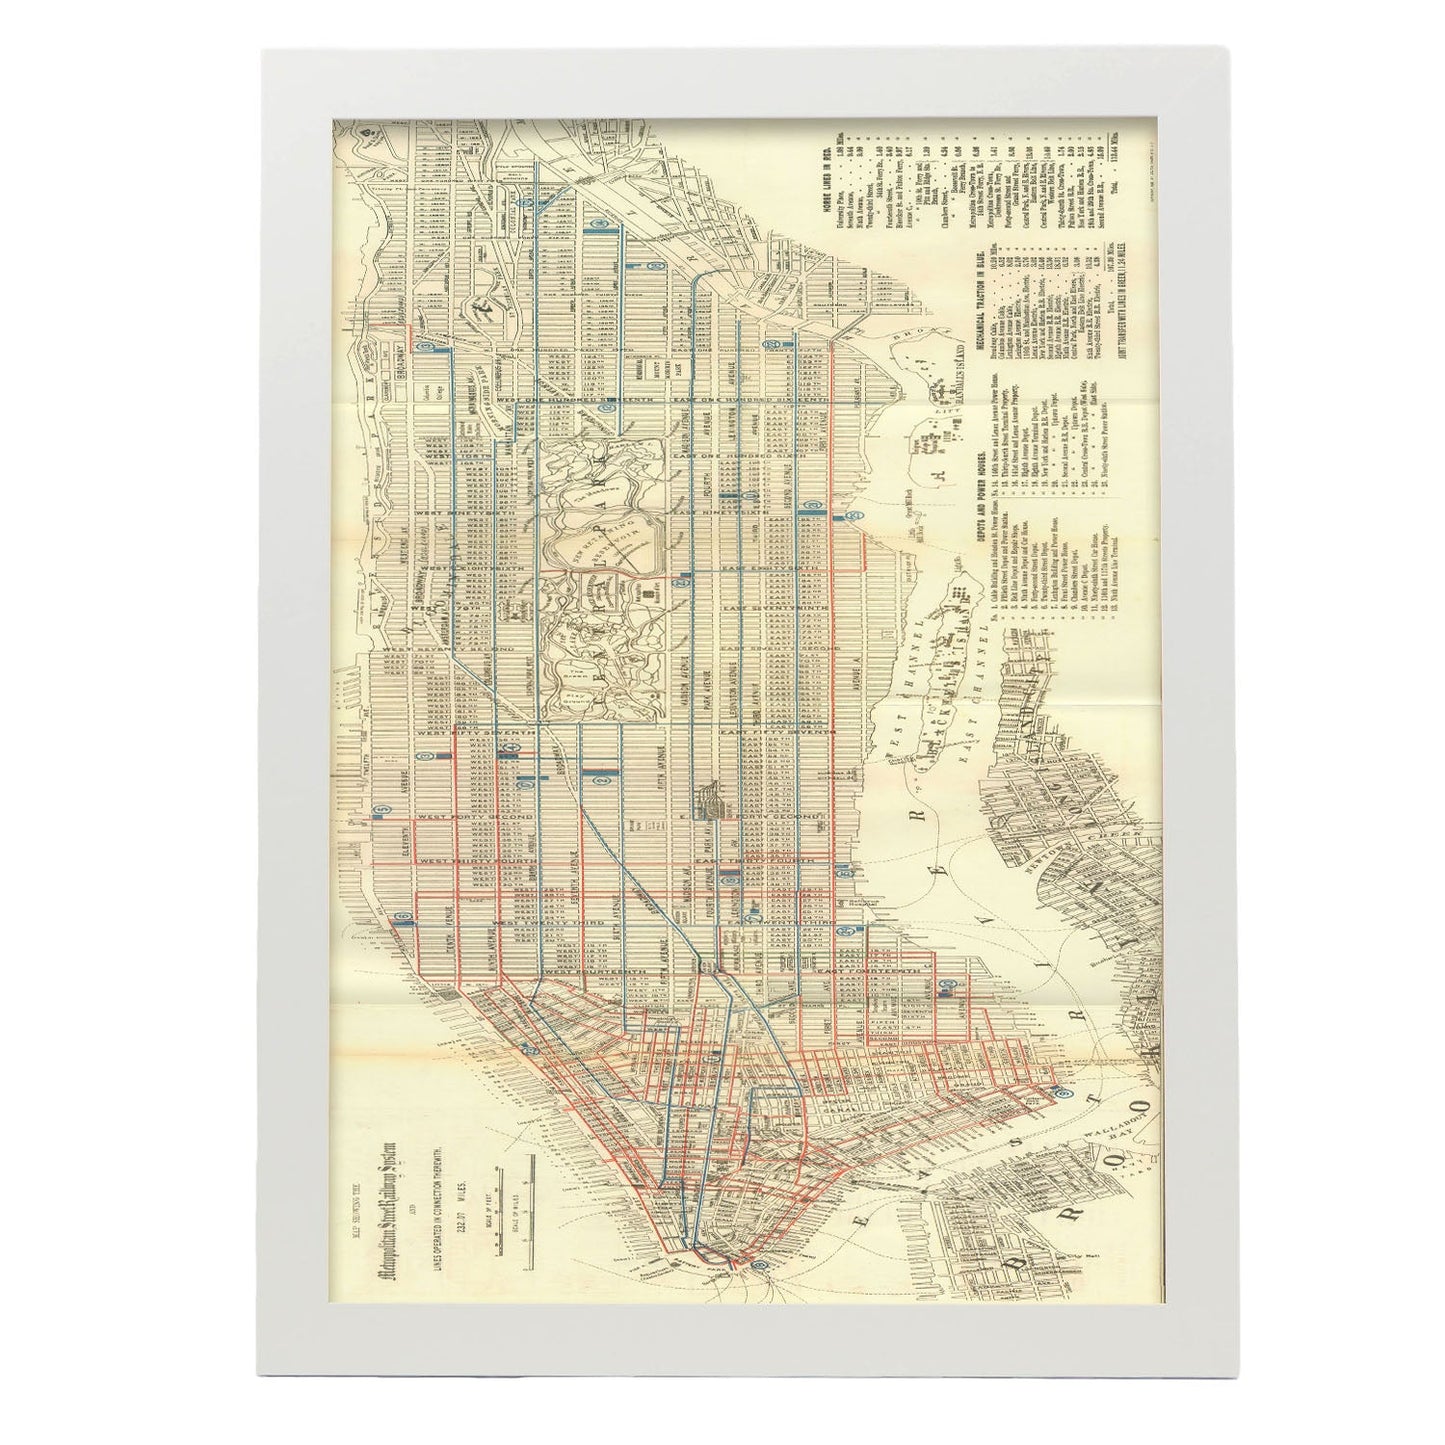 1899 Manhattan street railways-Artwork-Nacnic-A3-Marco Blanco-Nacnic Estudio SL